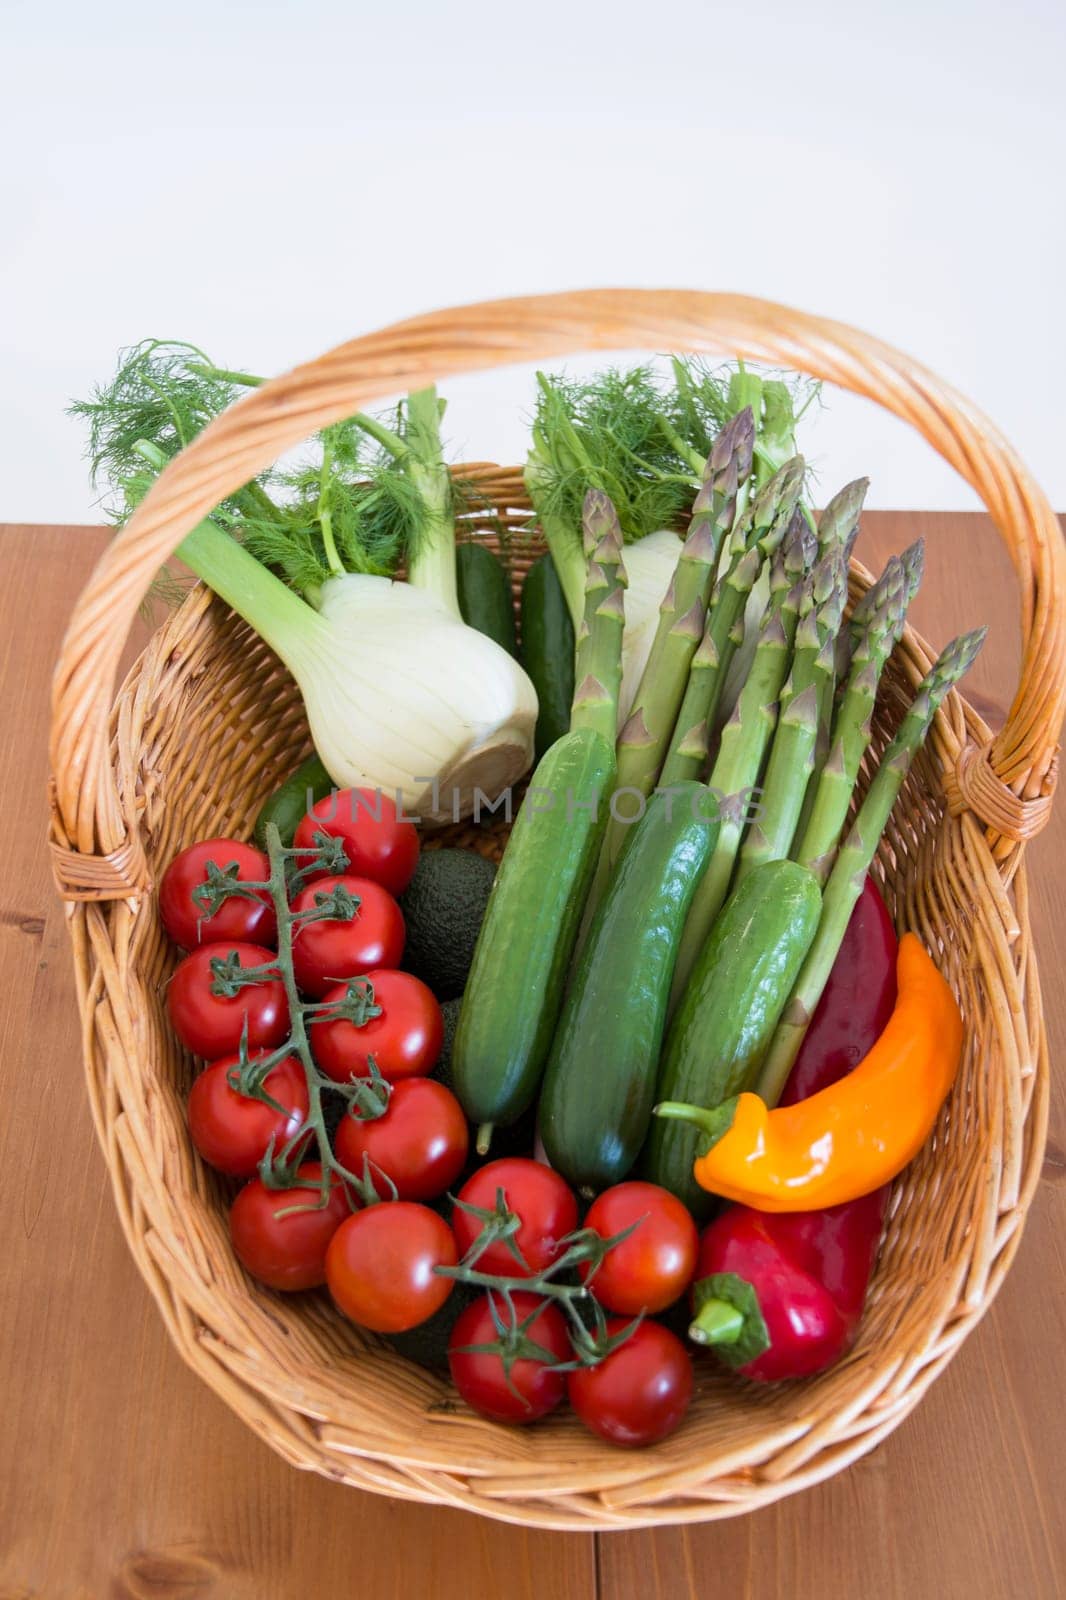 fresh assorted Vegetables in basket on wooden table,consumer vegetarian basket, tomatoes, fennel, paprika, asparagus by KaterinaDalemans